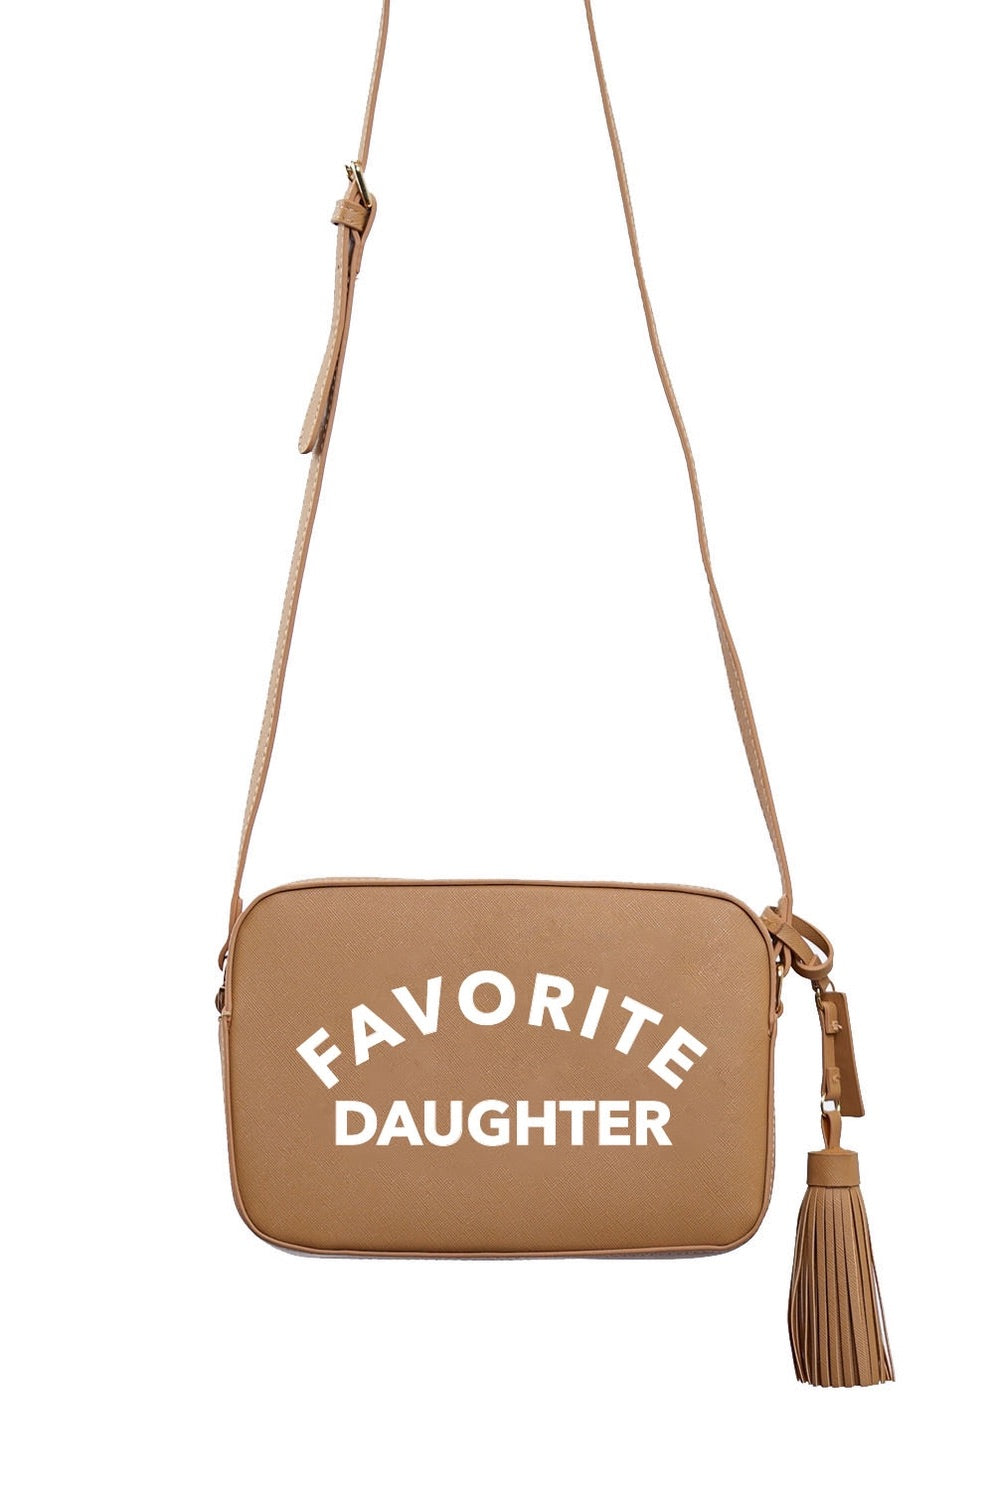 Favorite Daughter Boxy Bag (Camel)